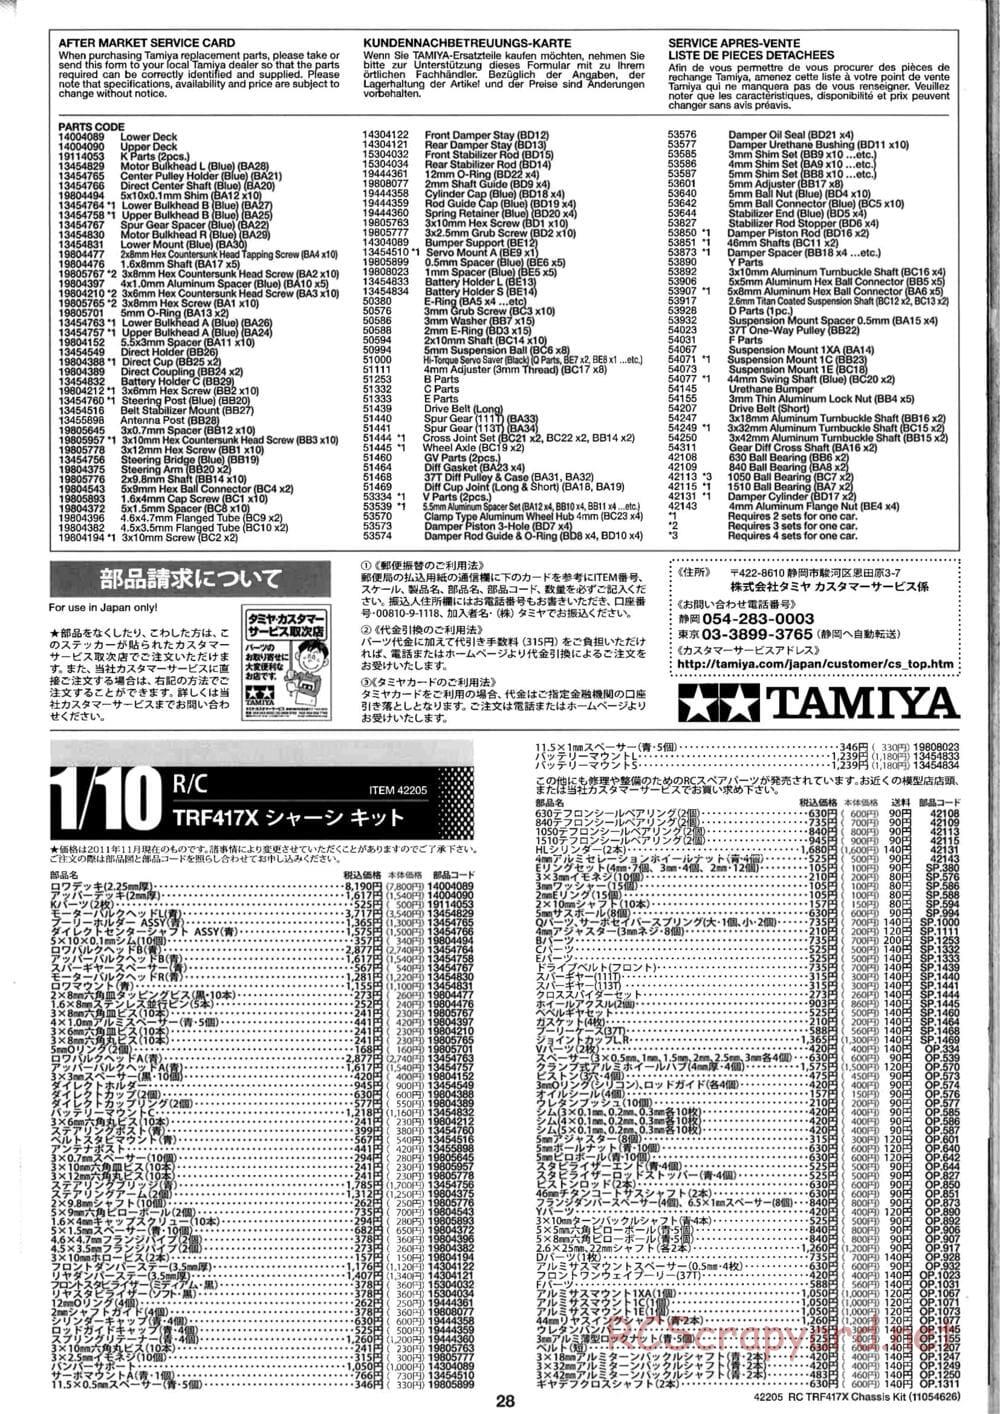 Tamiya - TRF417X Chassis - Manual - Page 28